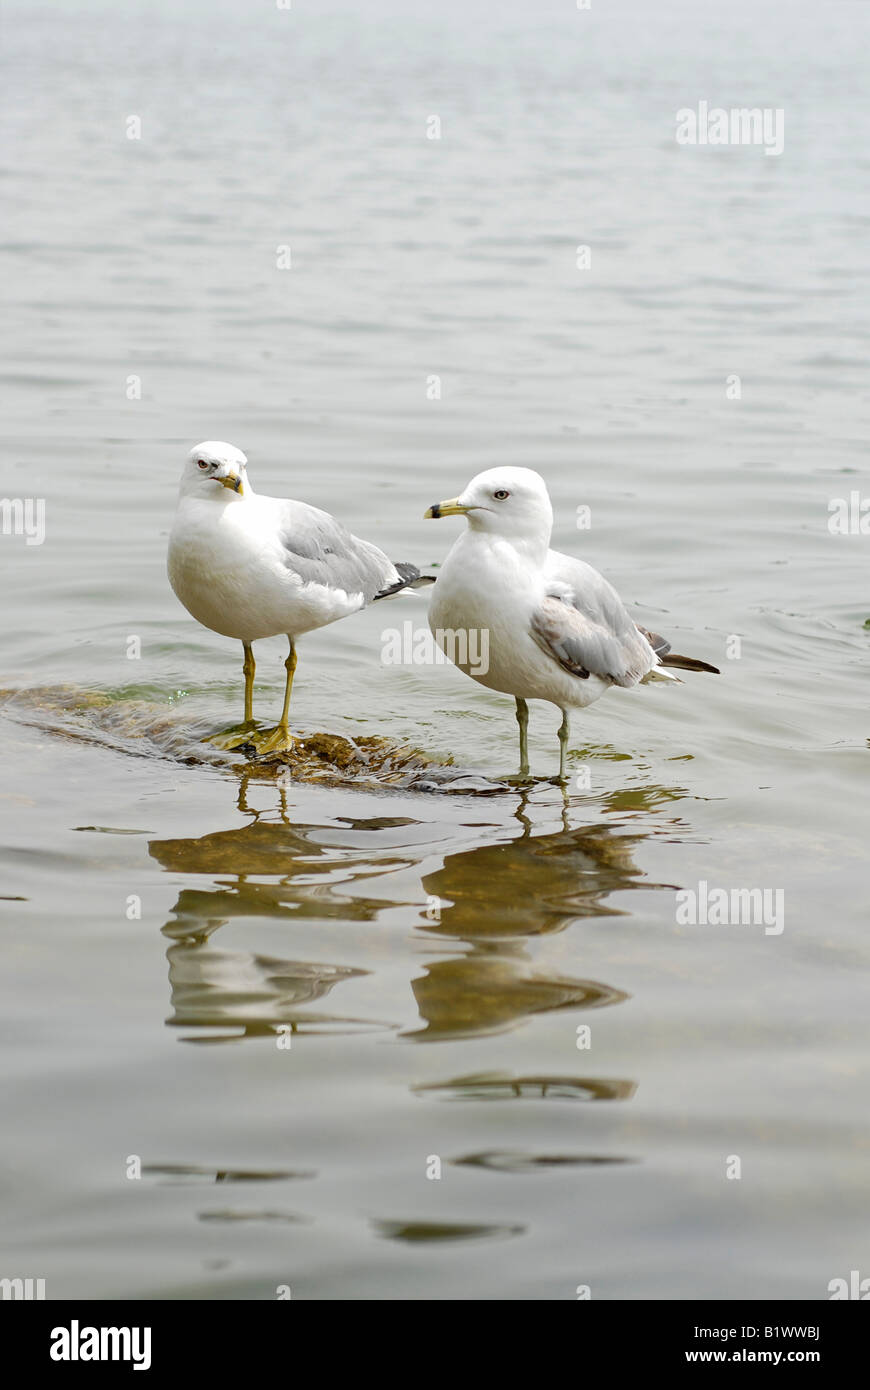 Pair of Herring Gulls / Seagulls, Mississauga, Port Credit area Stock Photo